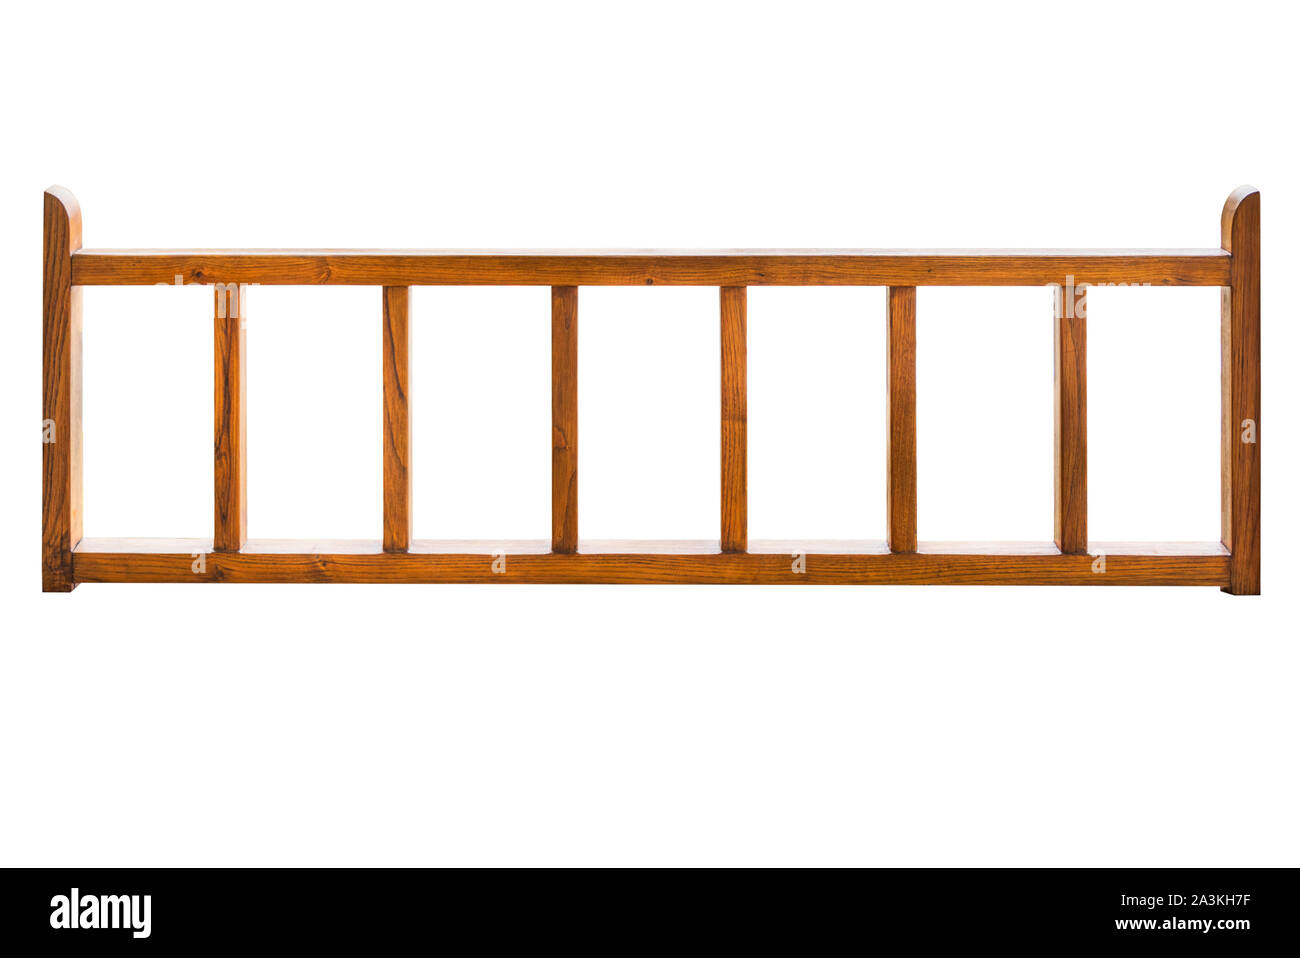 Wooden railing isolated on white background Stock Photo